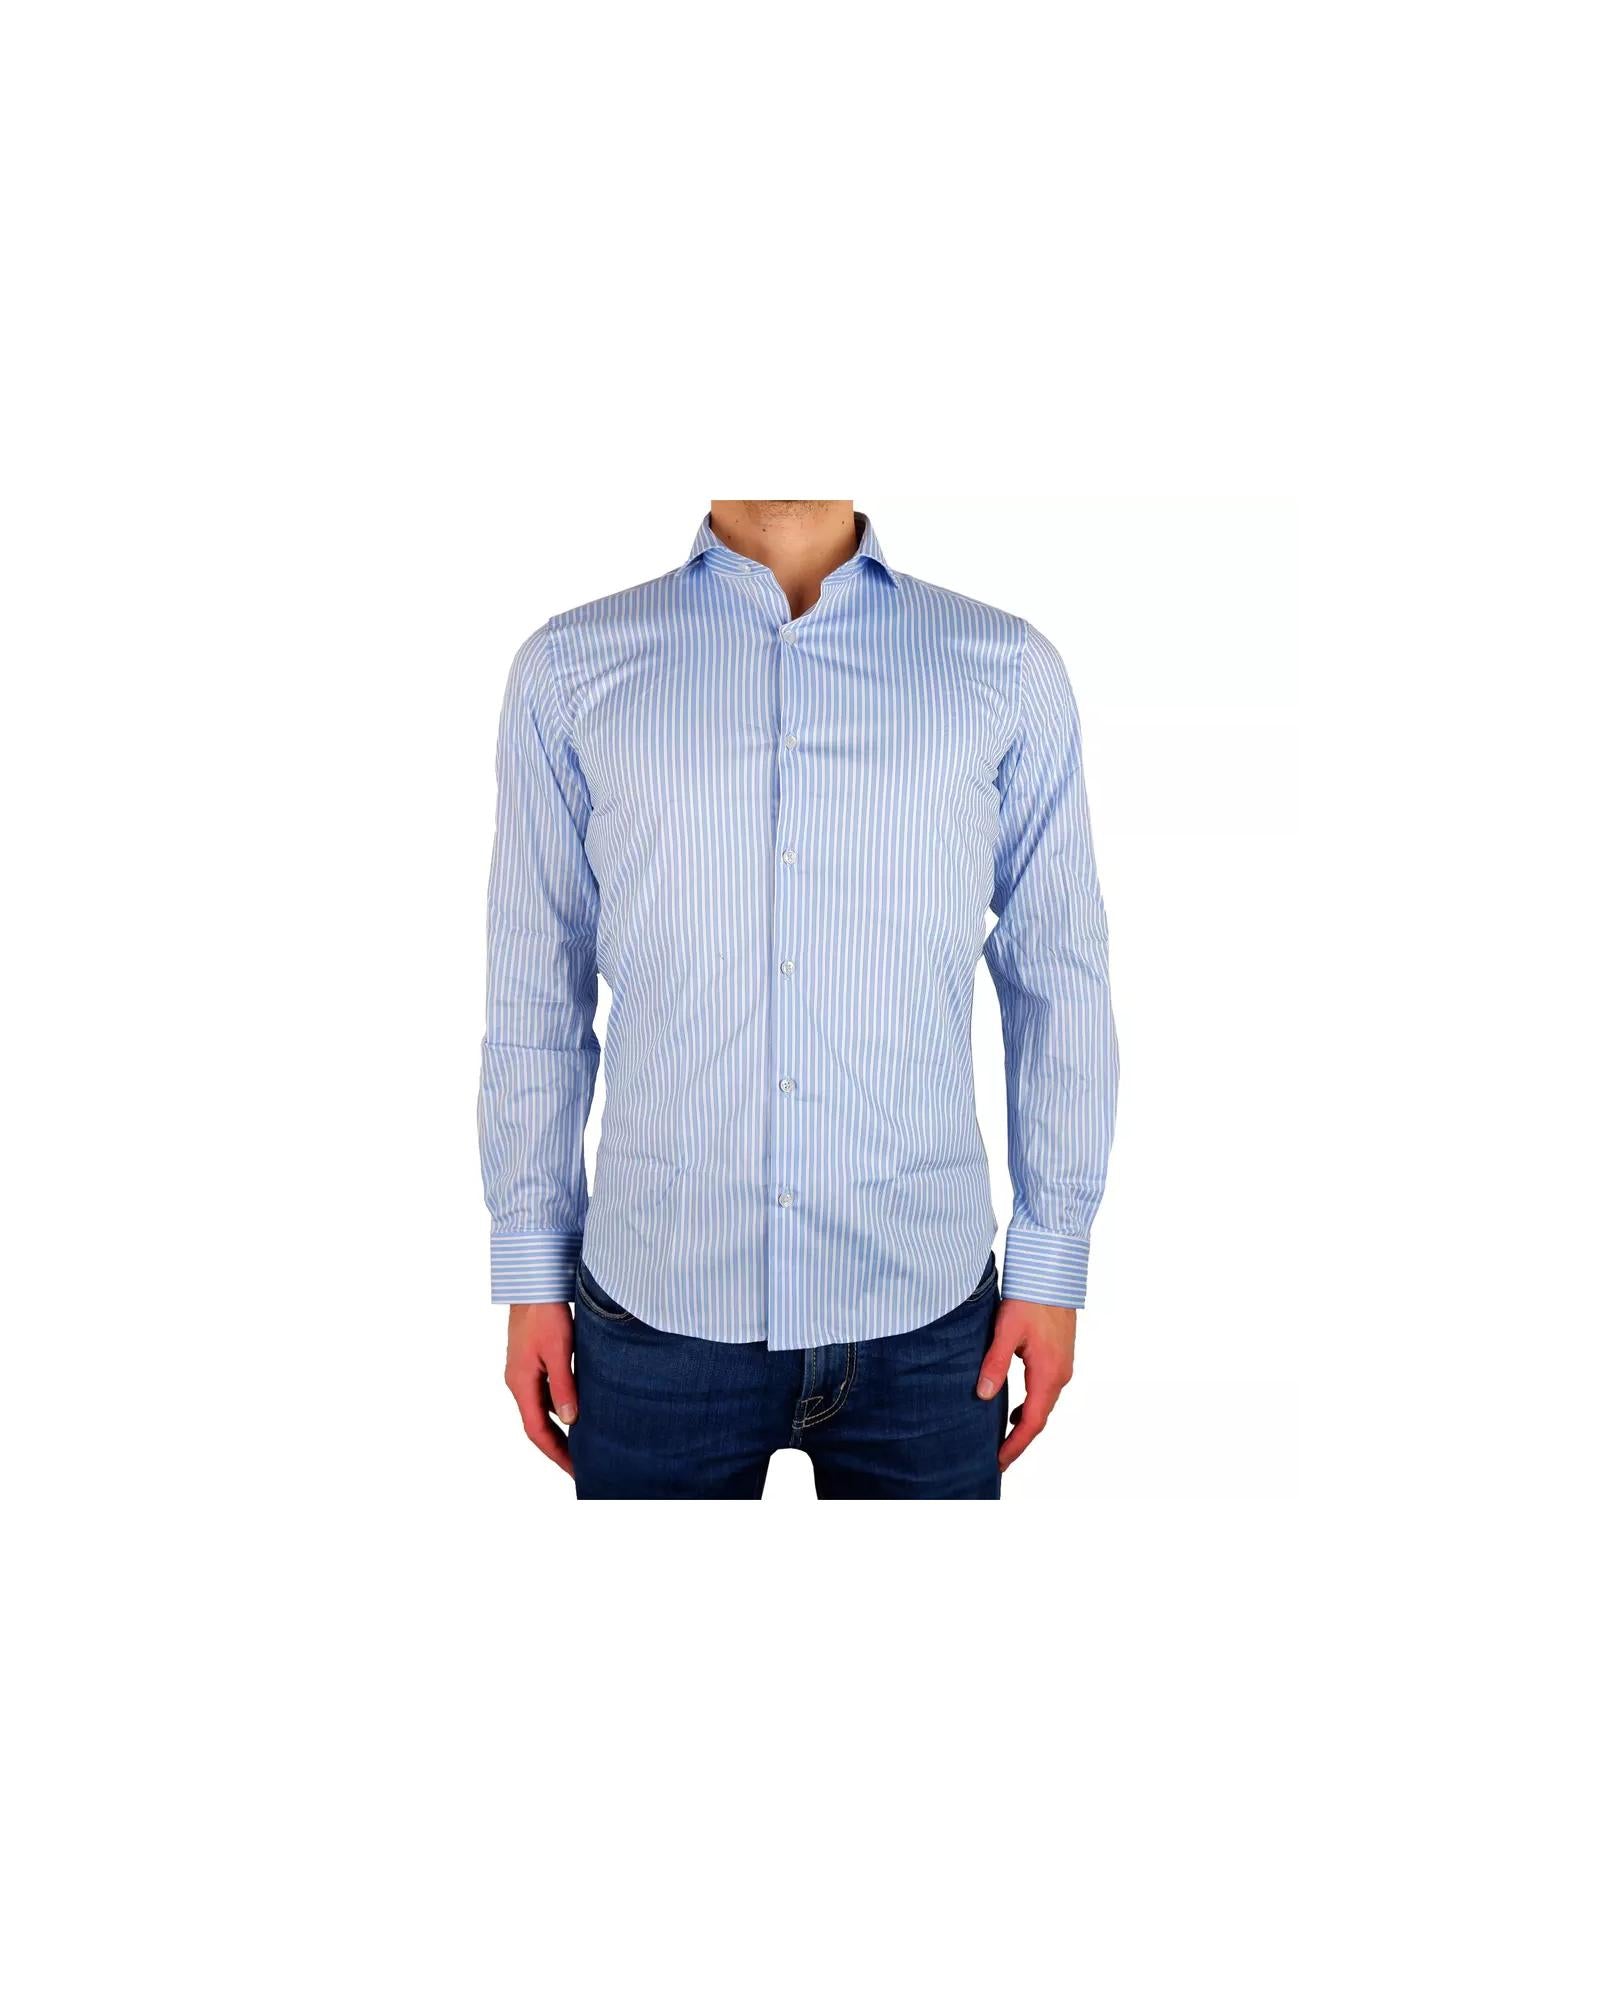 Milano Light Blue Striped Shirt - 100% Cotton 40 IT Men